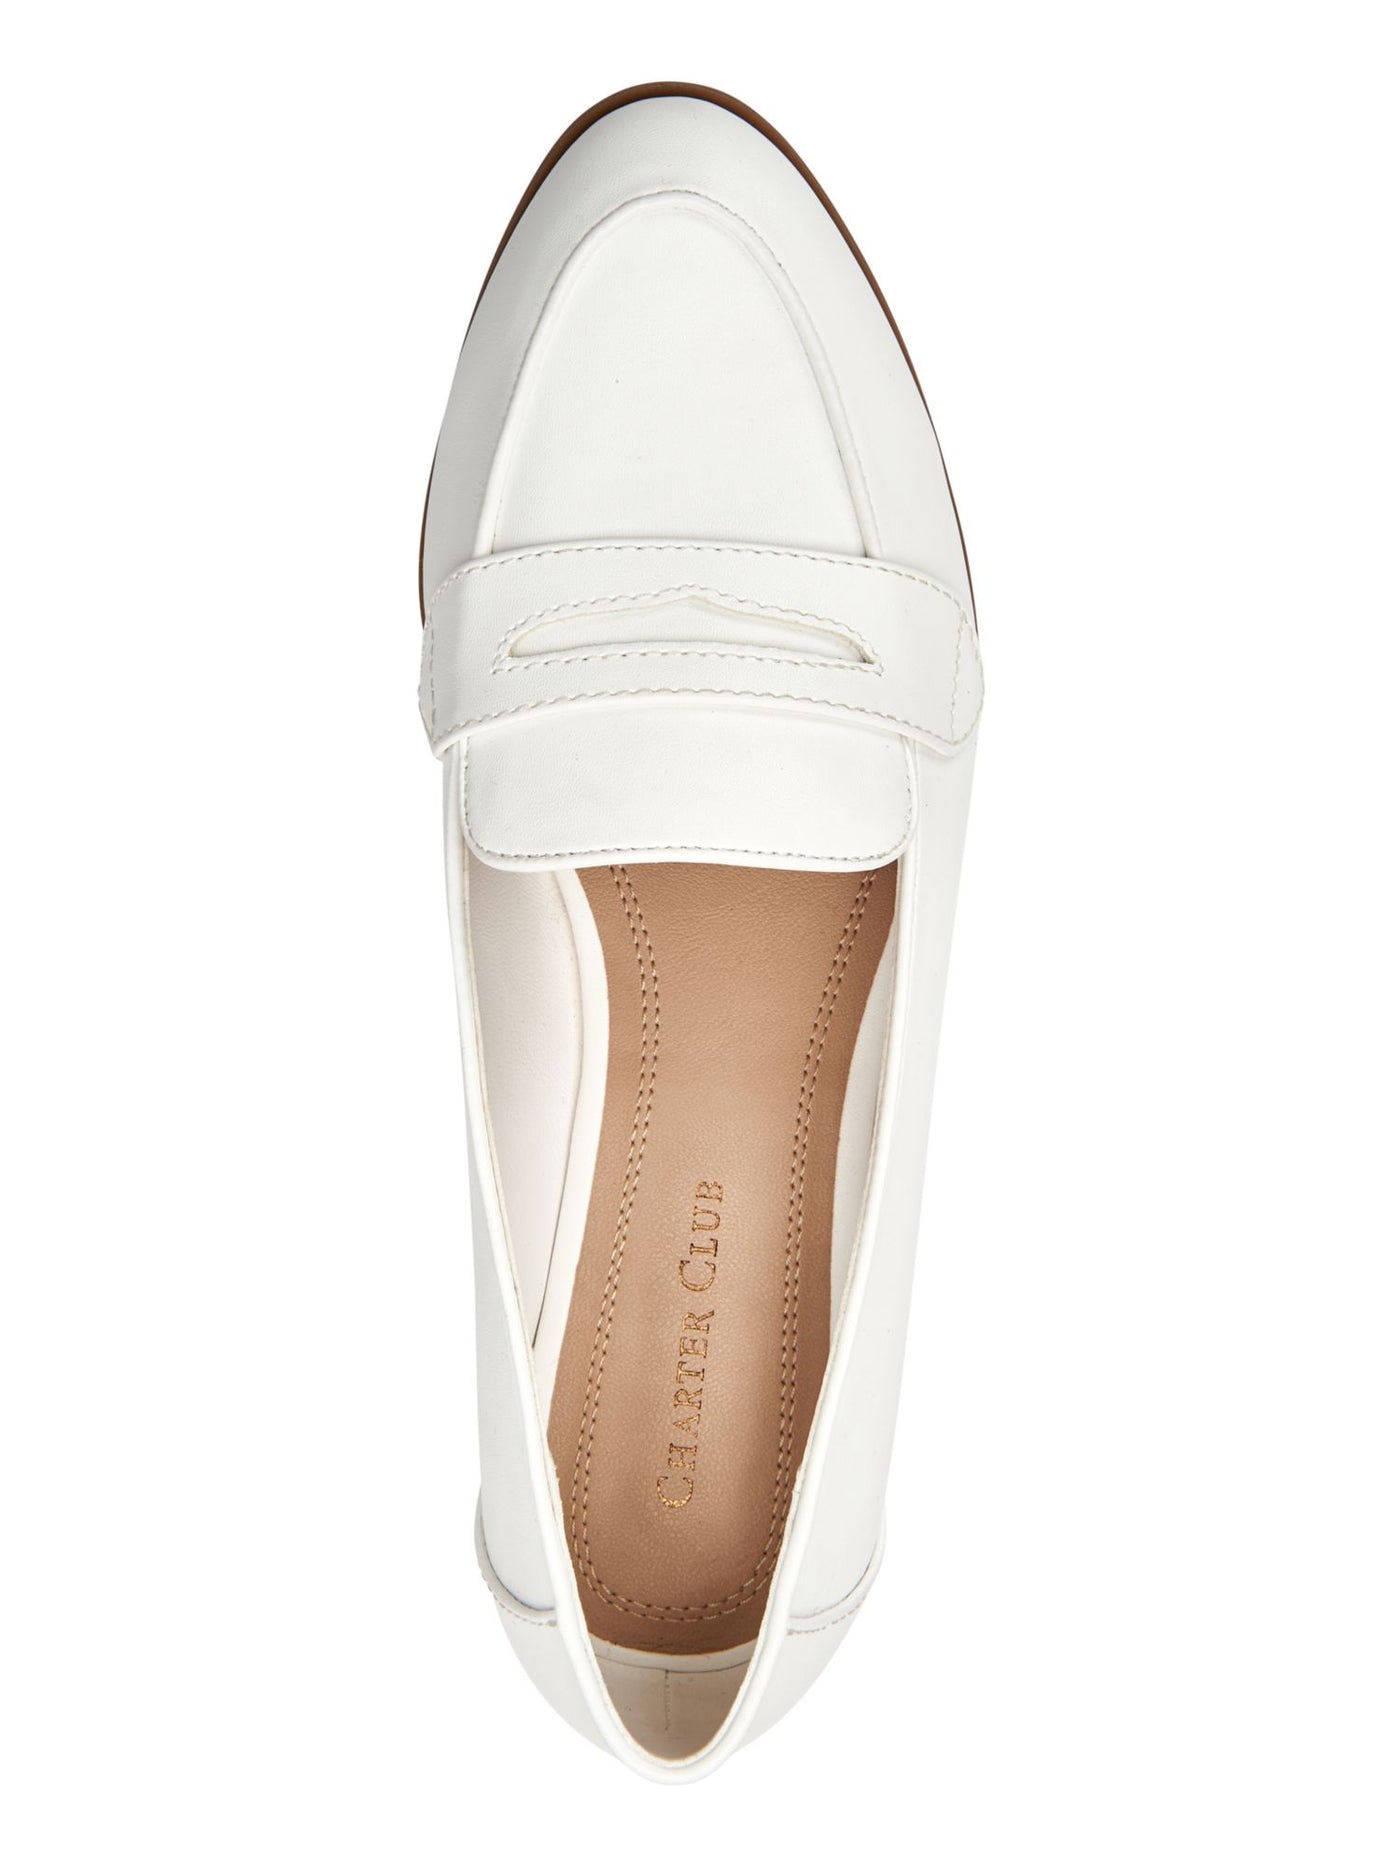 CHARTER CLUB Womens White Comfort Viviian Almond Toe Slip On Loafers Shoes 6.5 M